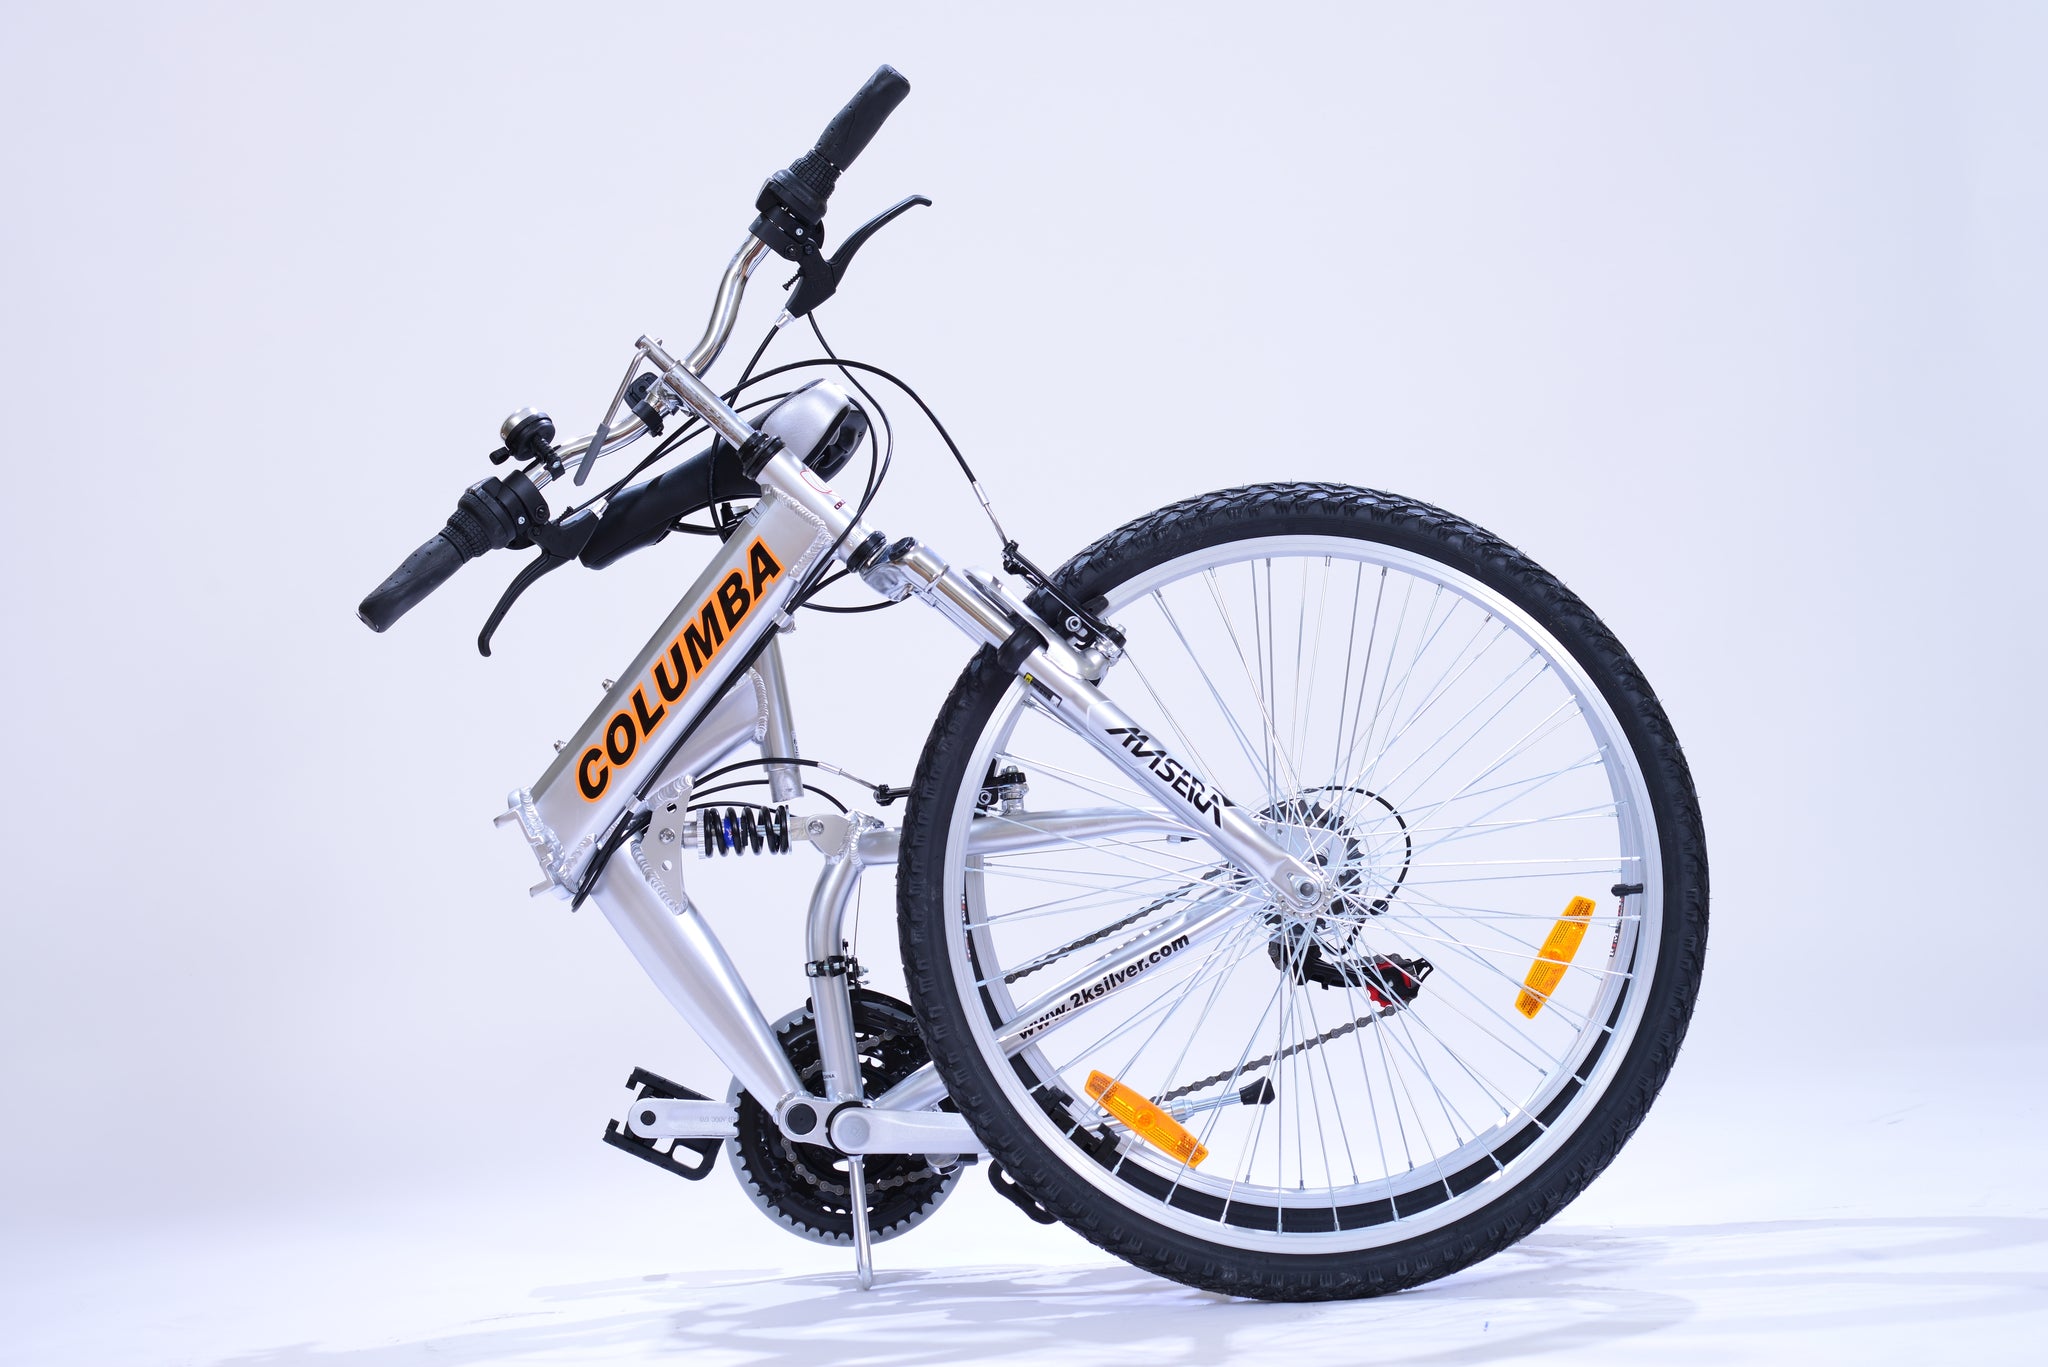 Folded silver bicycle with orange and black logo titled "Columba."